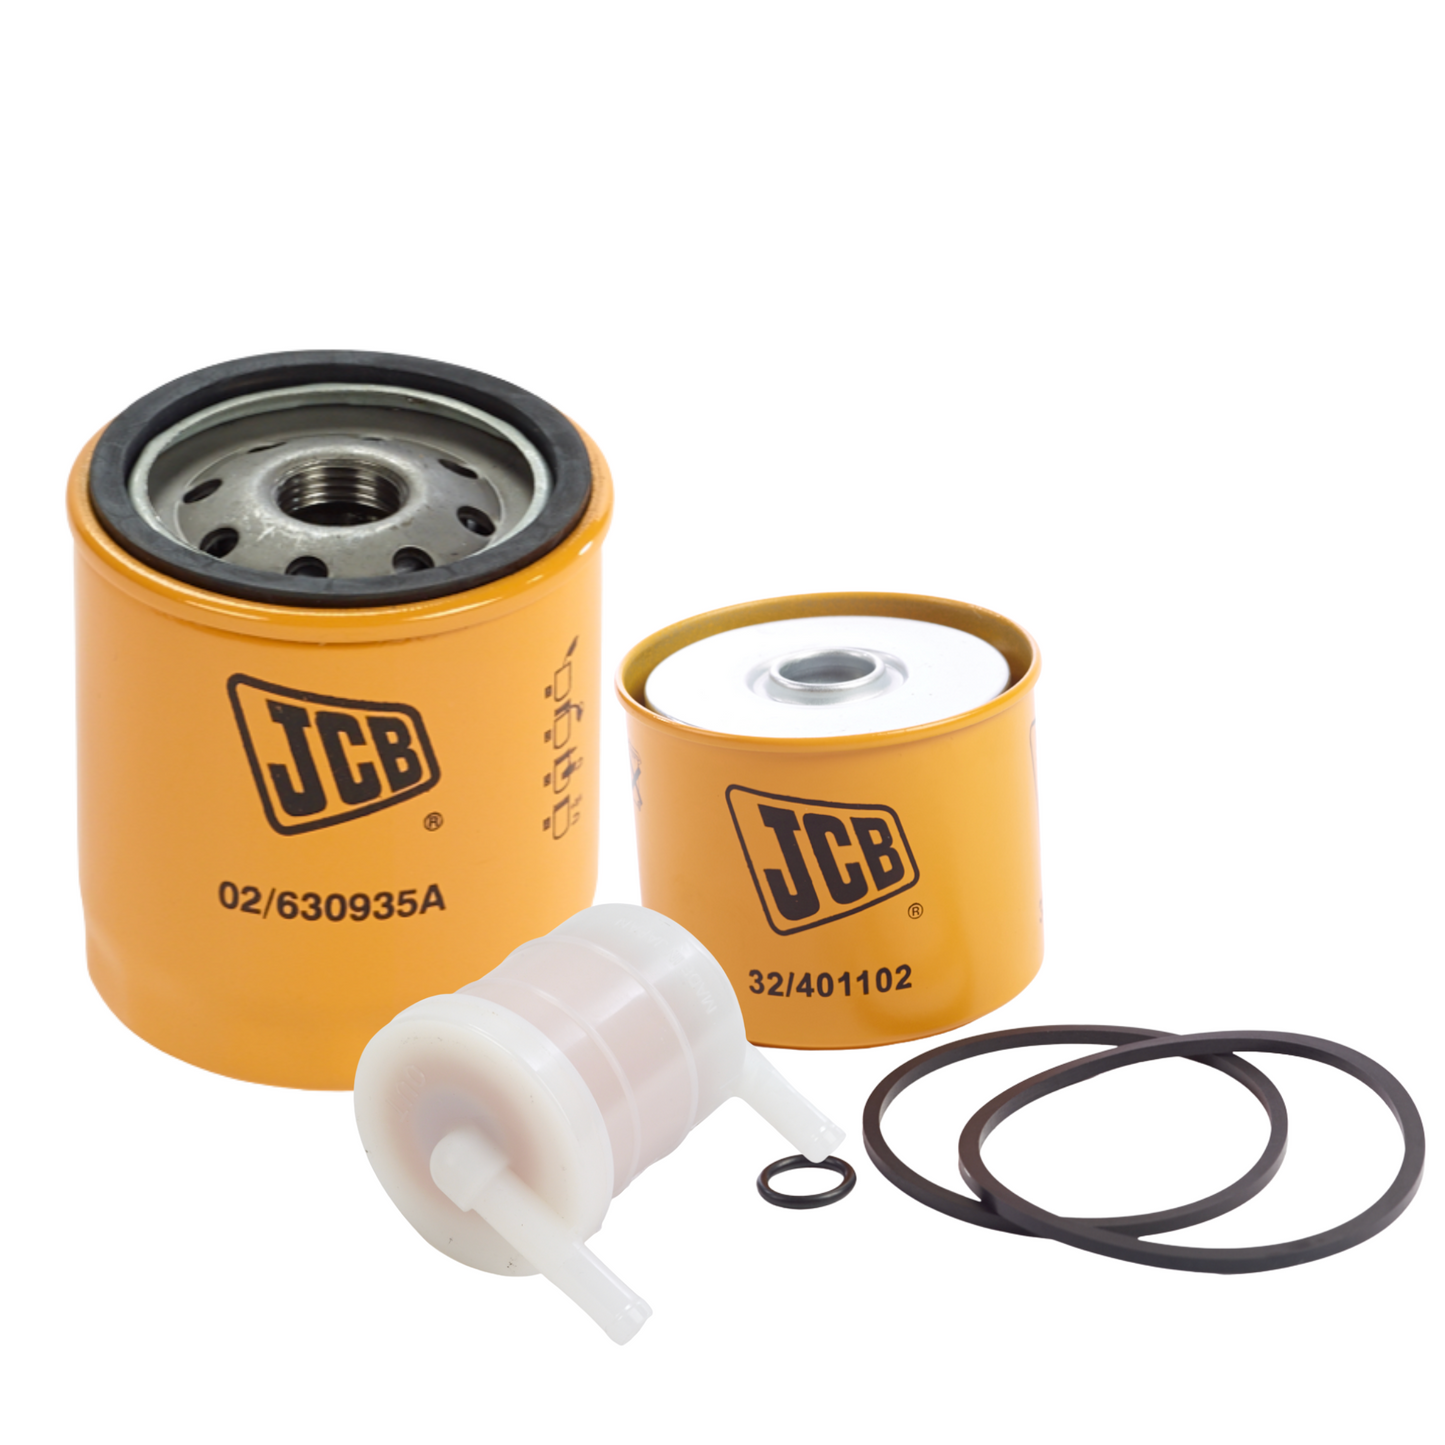 JCB 520-40 7500 Hour Service Filter Kit